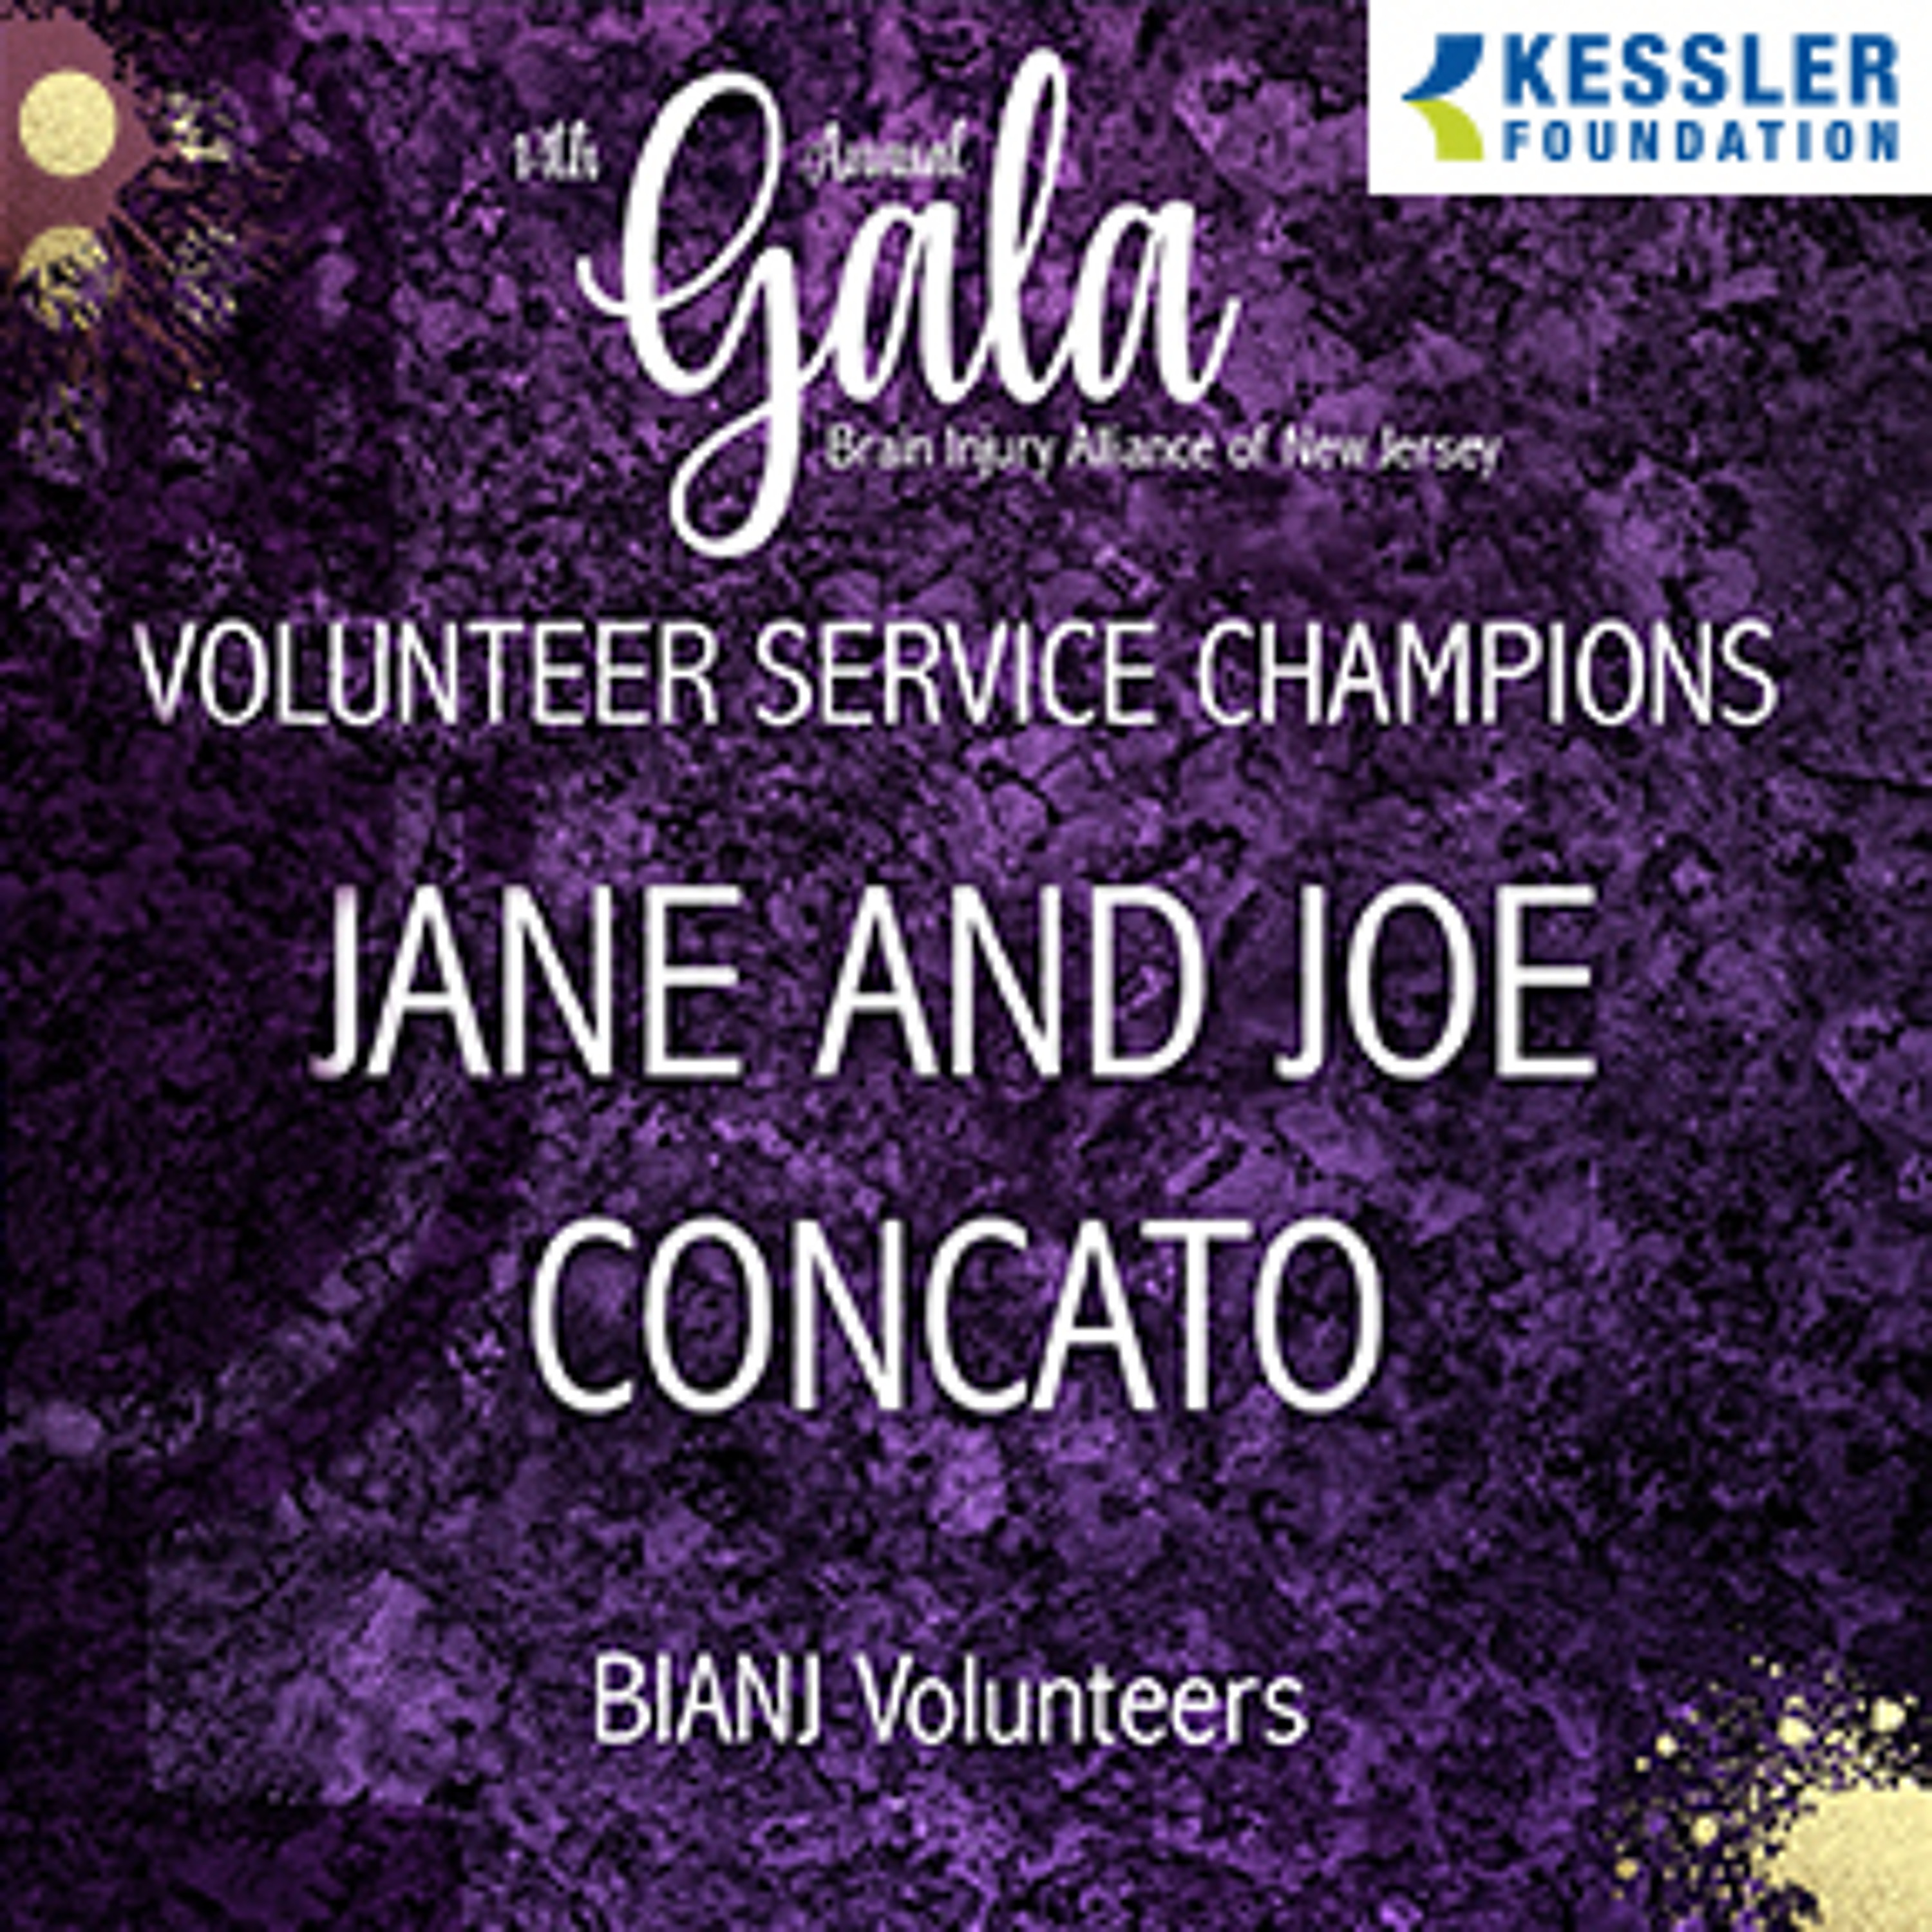 Volunteering Has Given Us Both a Purpose - 2020 BIANJ honoree Jane and Joe Concato